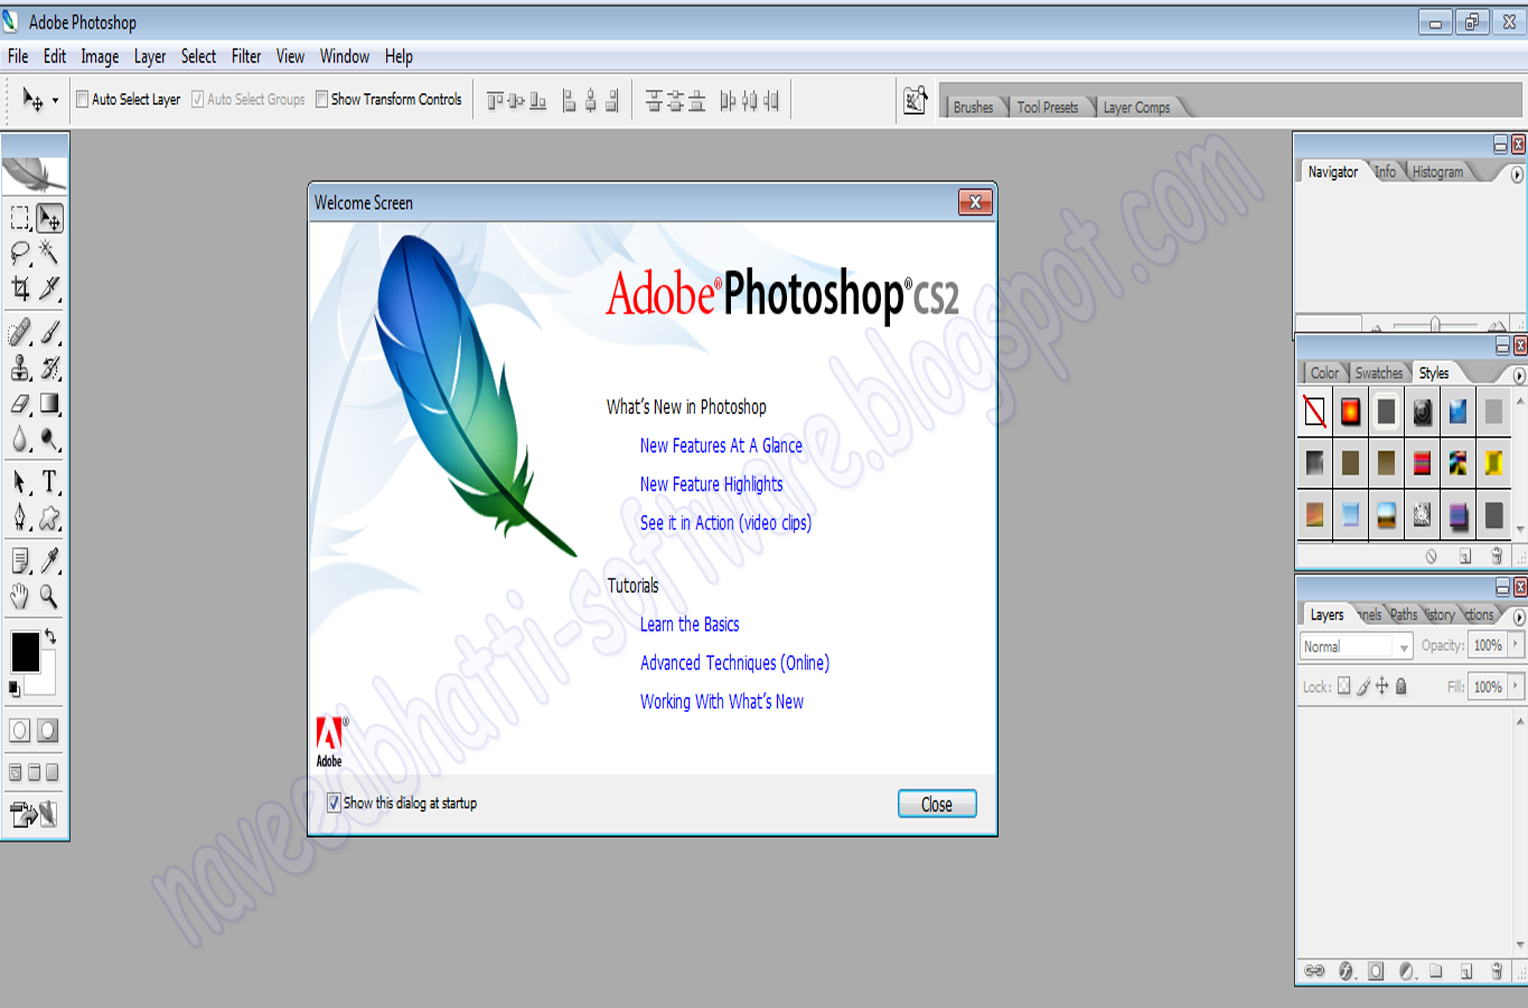 adobe photoshop cs2 9.0 download crack & keygen with